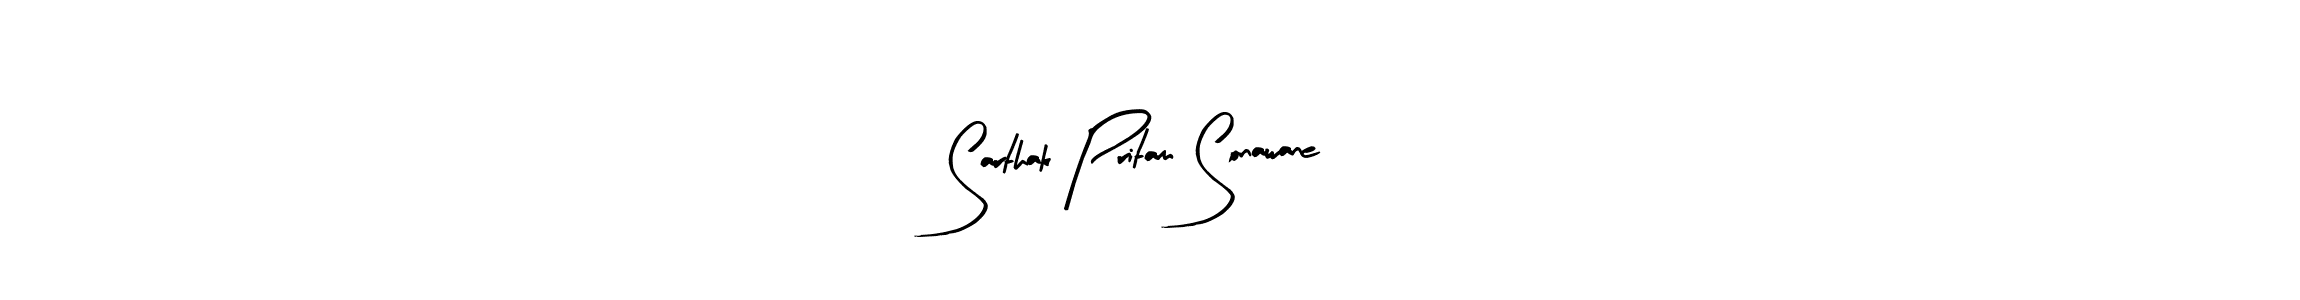 Sarthak Pritam Sonawane stylish signature style. Best Handwritten Sign (Arty Signature) for my name. Handwritten Signature Collection Ideas for my name Sarthak Pritam Sonawane. Sarthak Pritam Sonawane signature style 8 images and pictures png